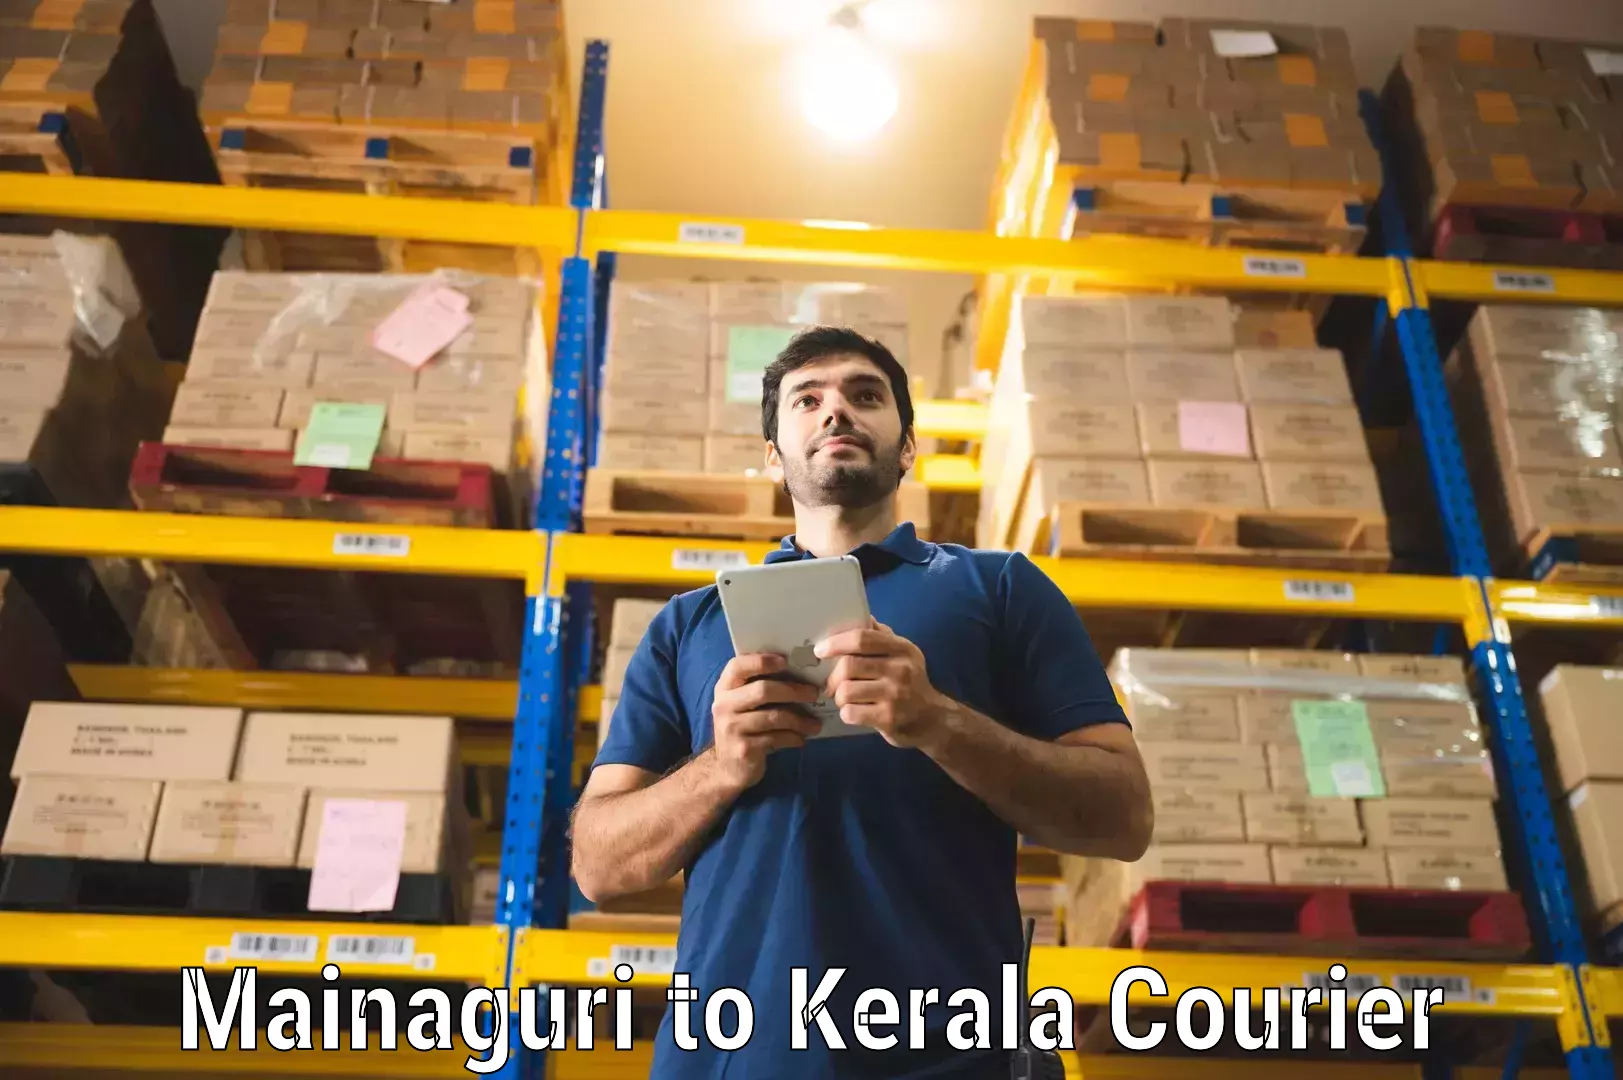 Local delivery service Mainaguri to Kerala